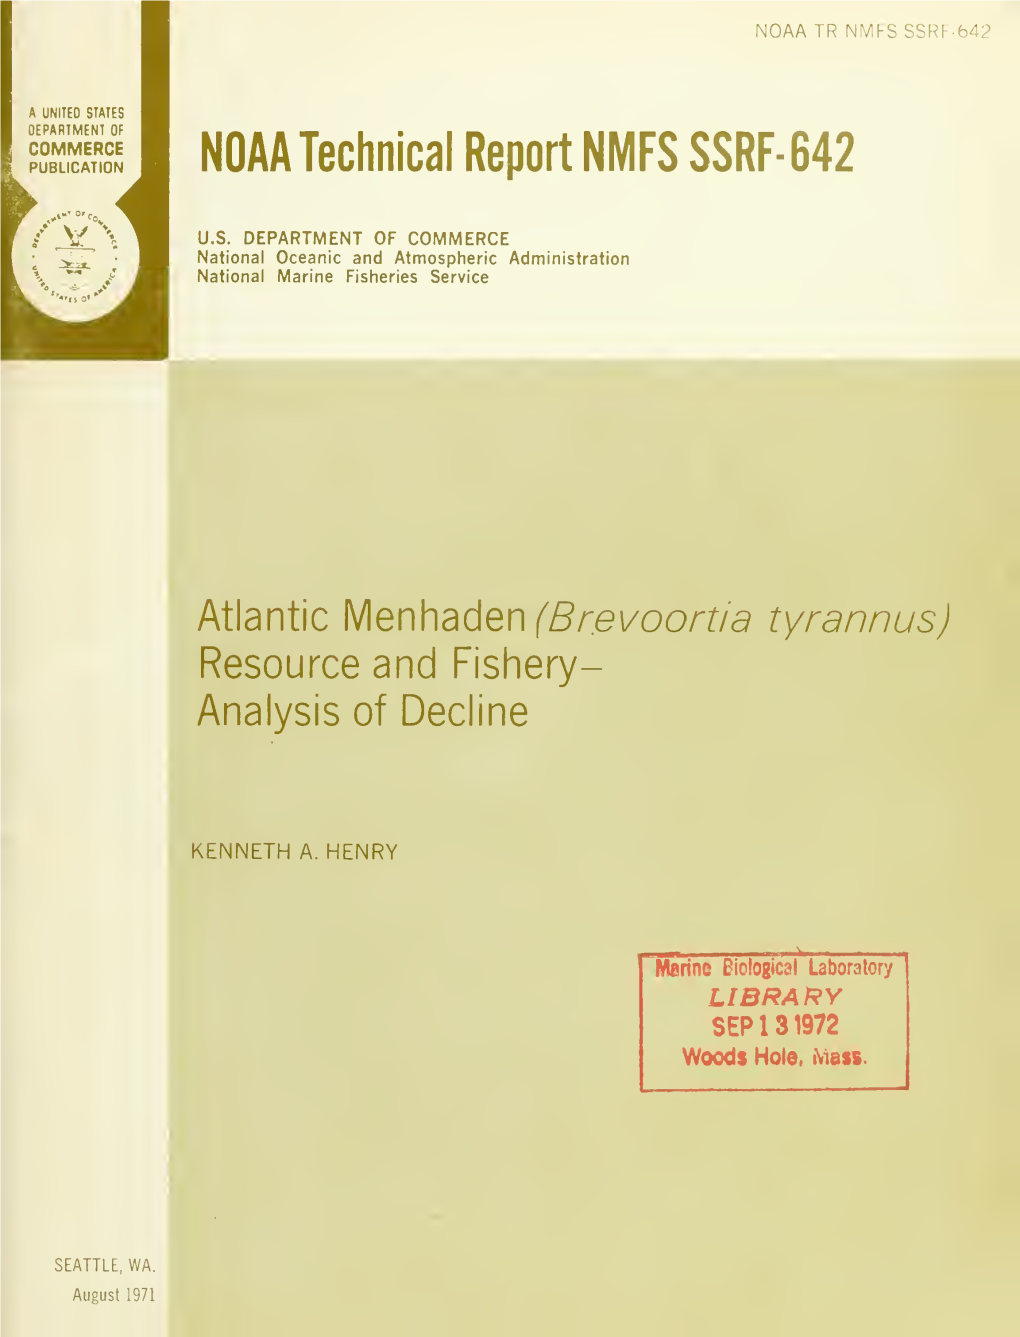 NOAA Technical Report NMFS SSRF-642